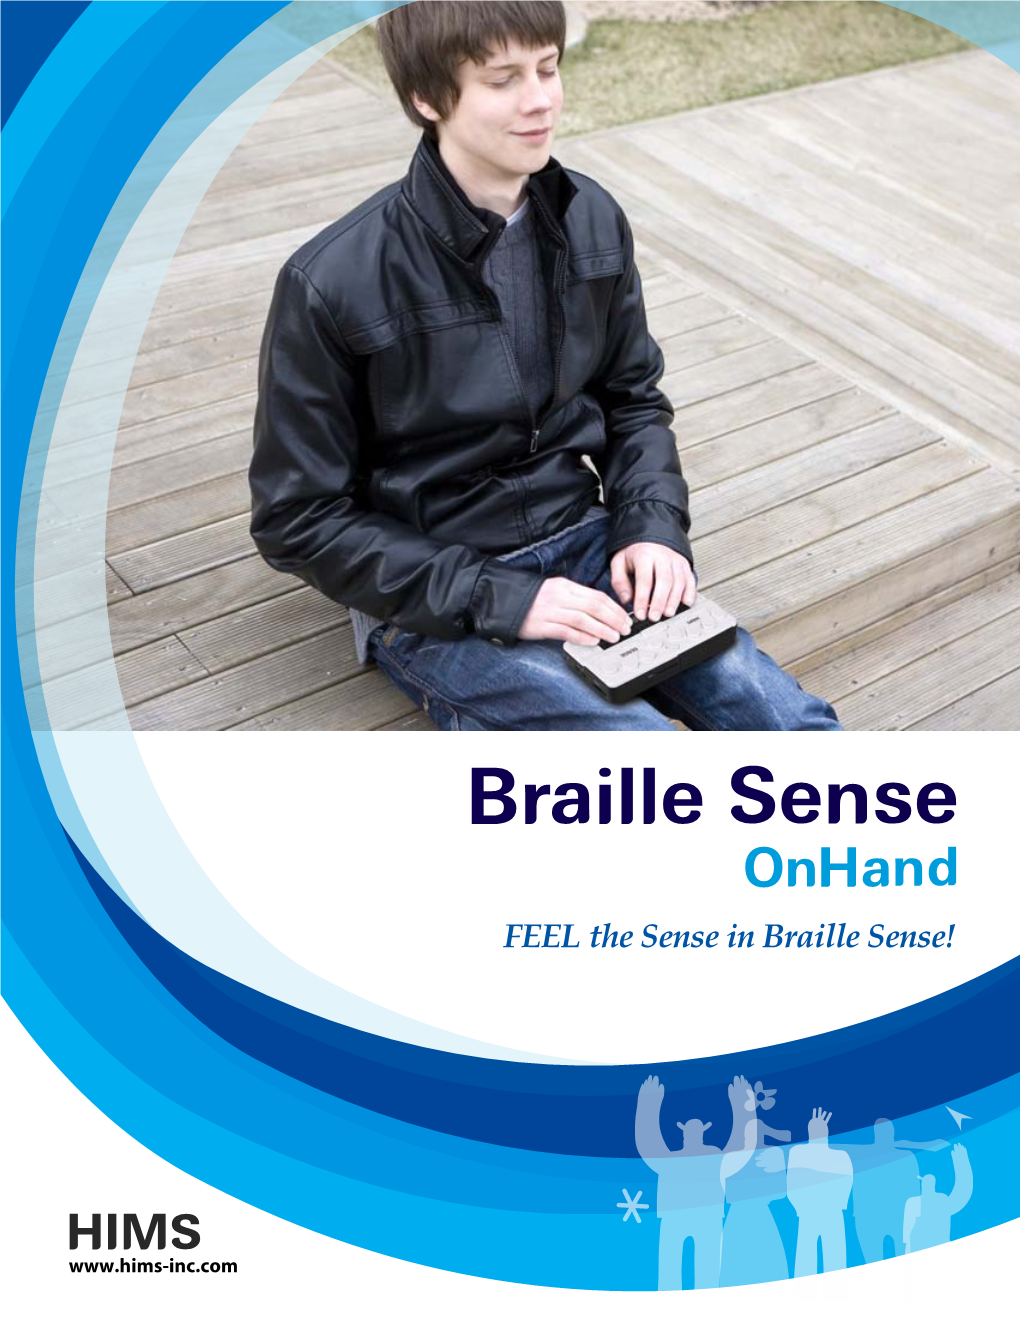 FEEL the Sense in Braille Sense! Weight 425G / 0.93Lbs